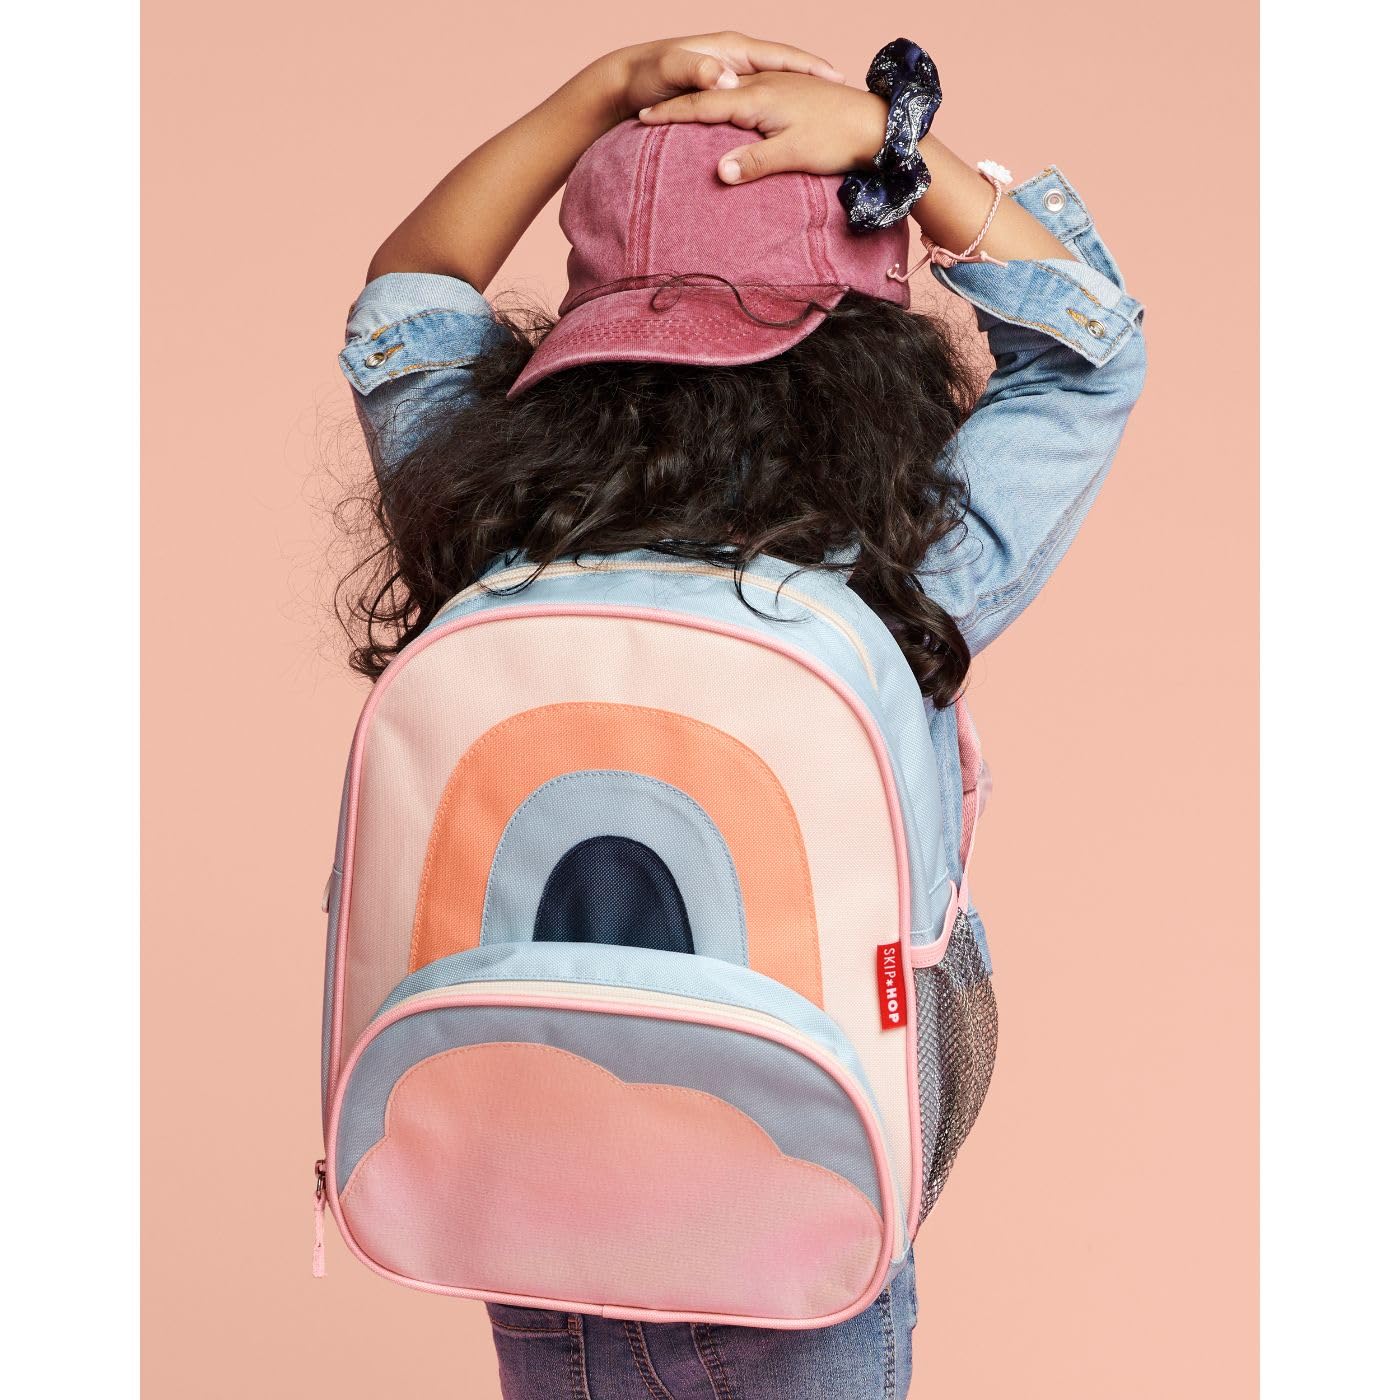 Skip Hop Sparks Little Kid's Backpack, Preschool Ages 3-4, Rainbow